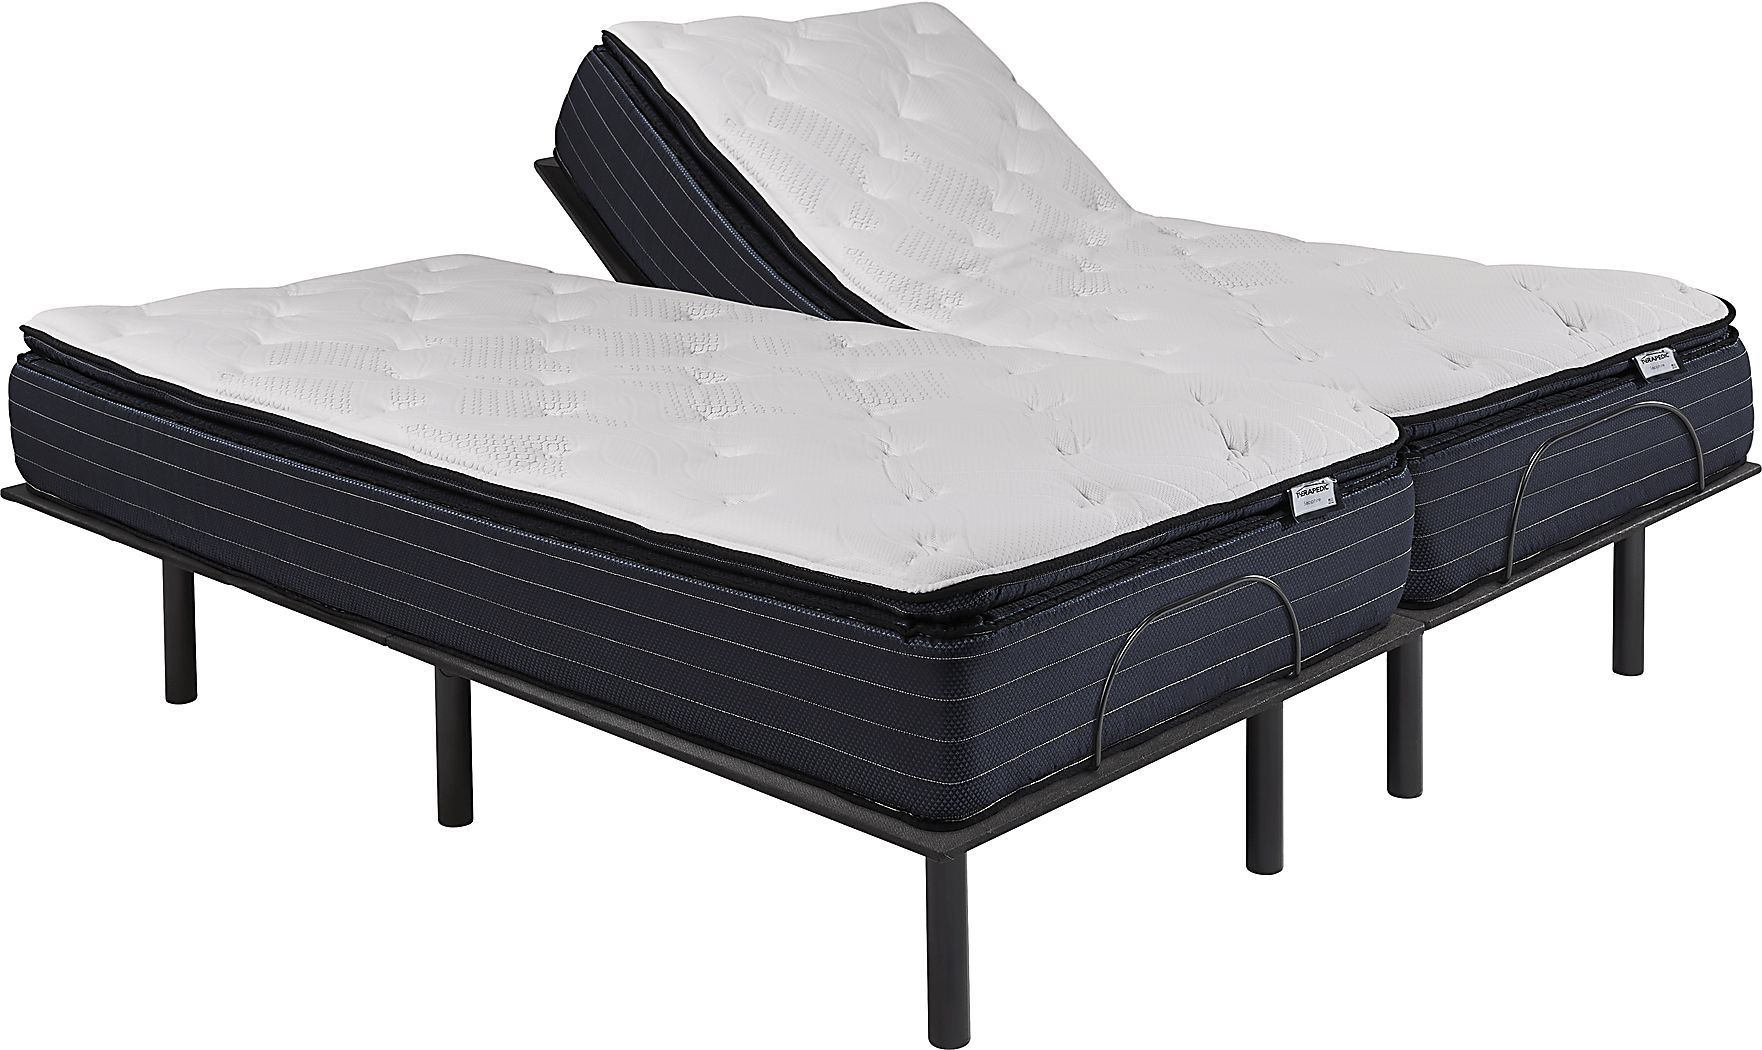 therapedic mattress cover warranty requirement